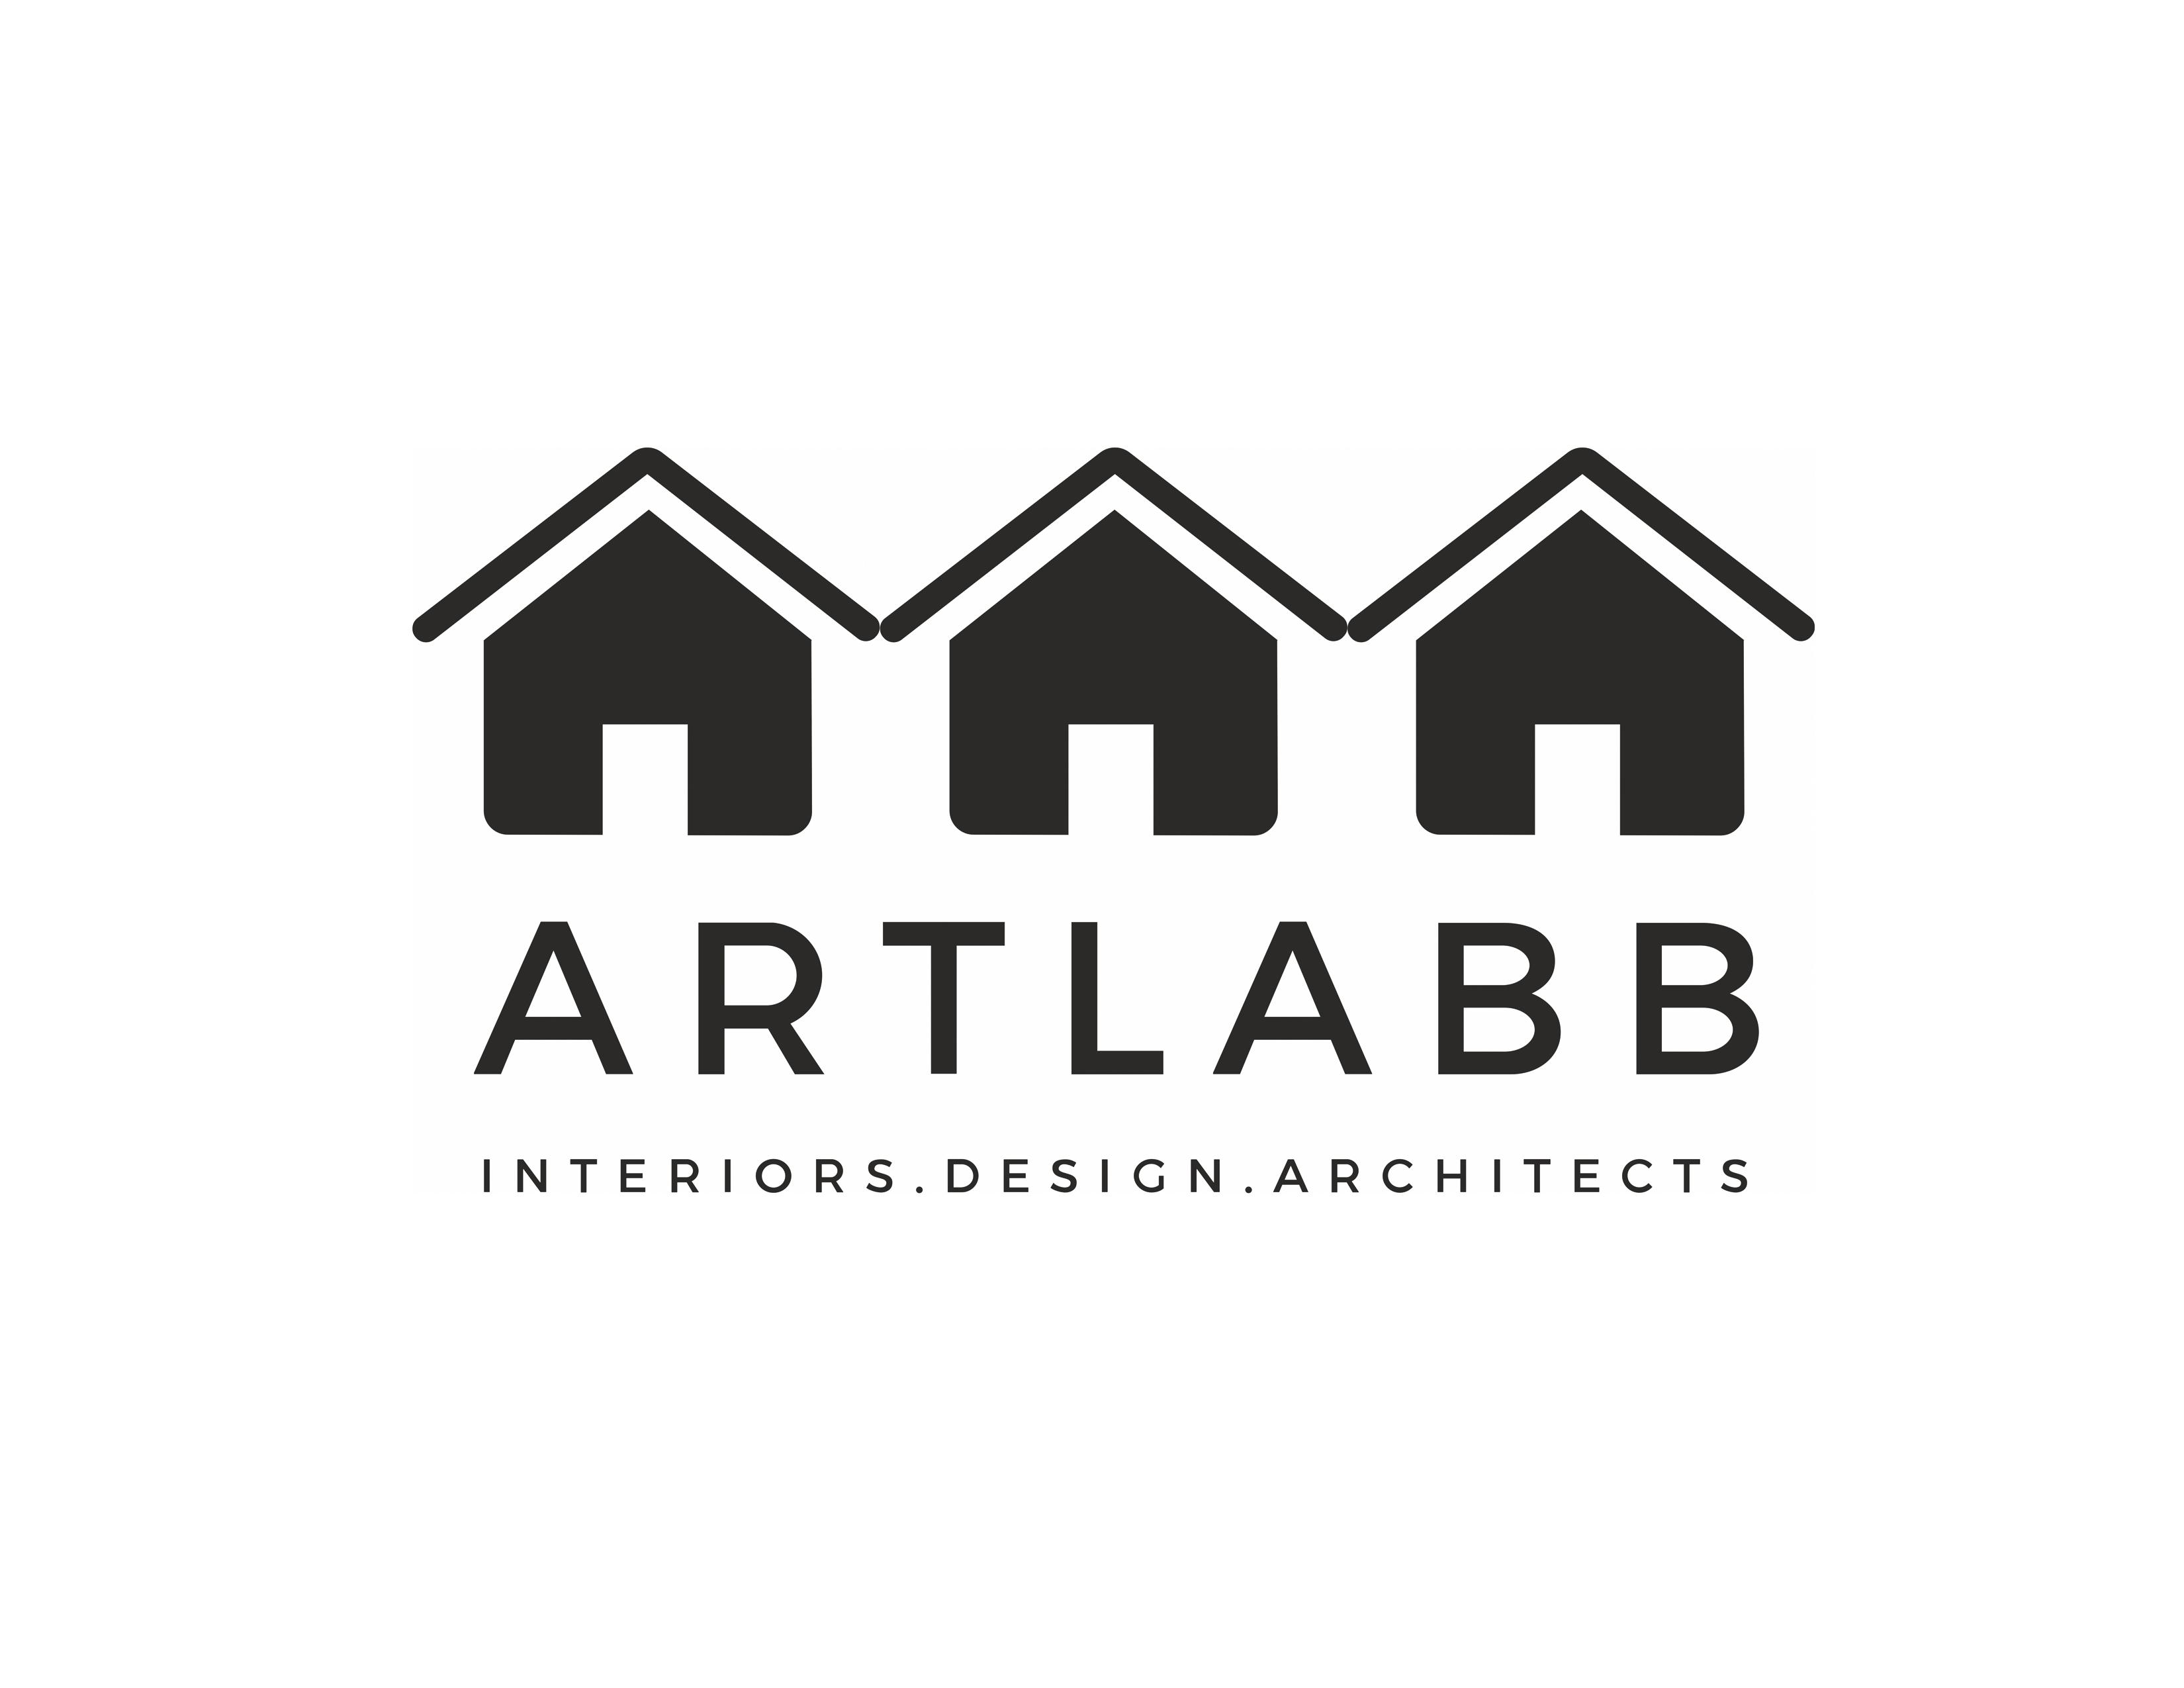 Artlabb